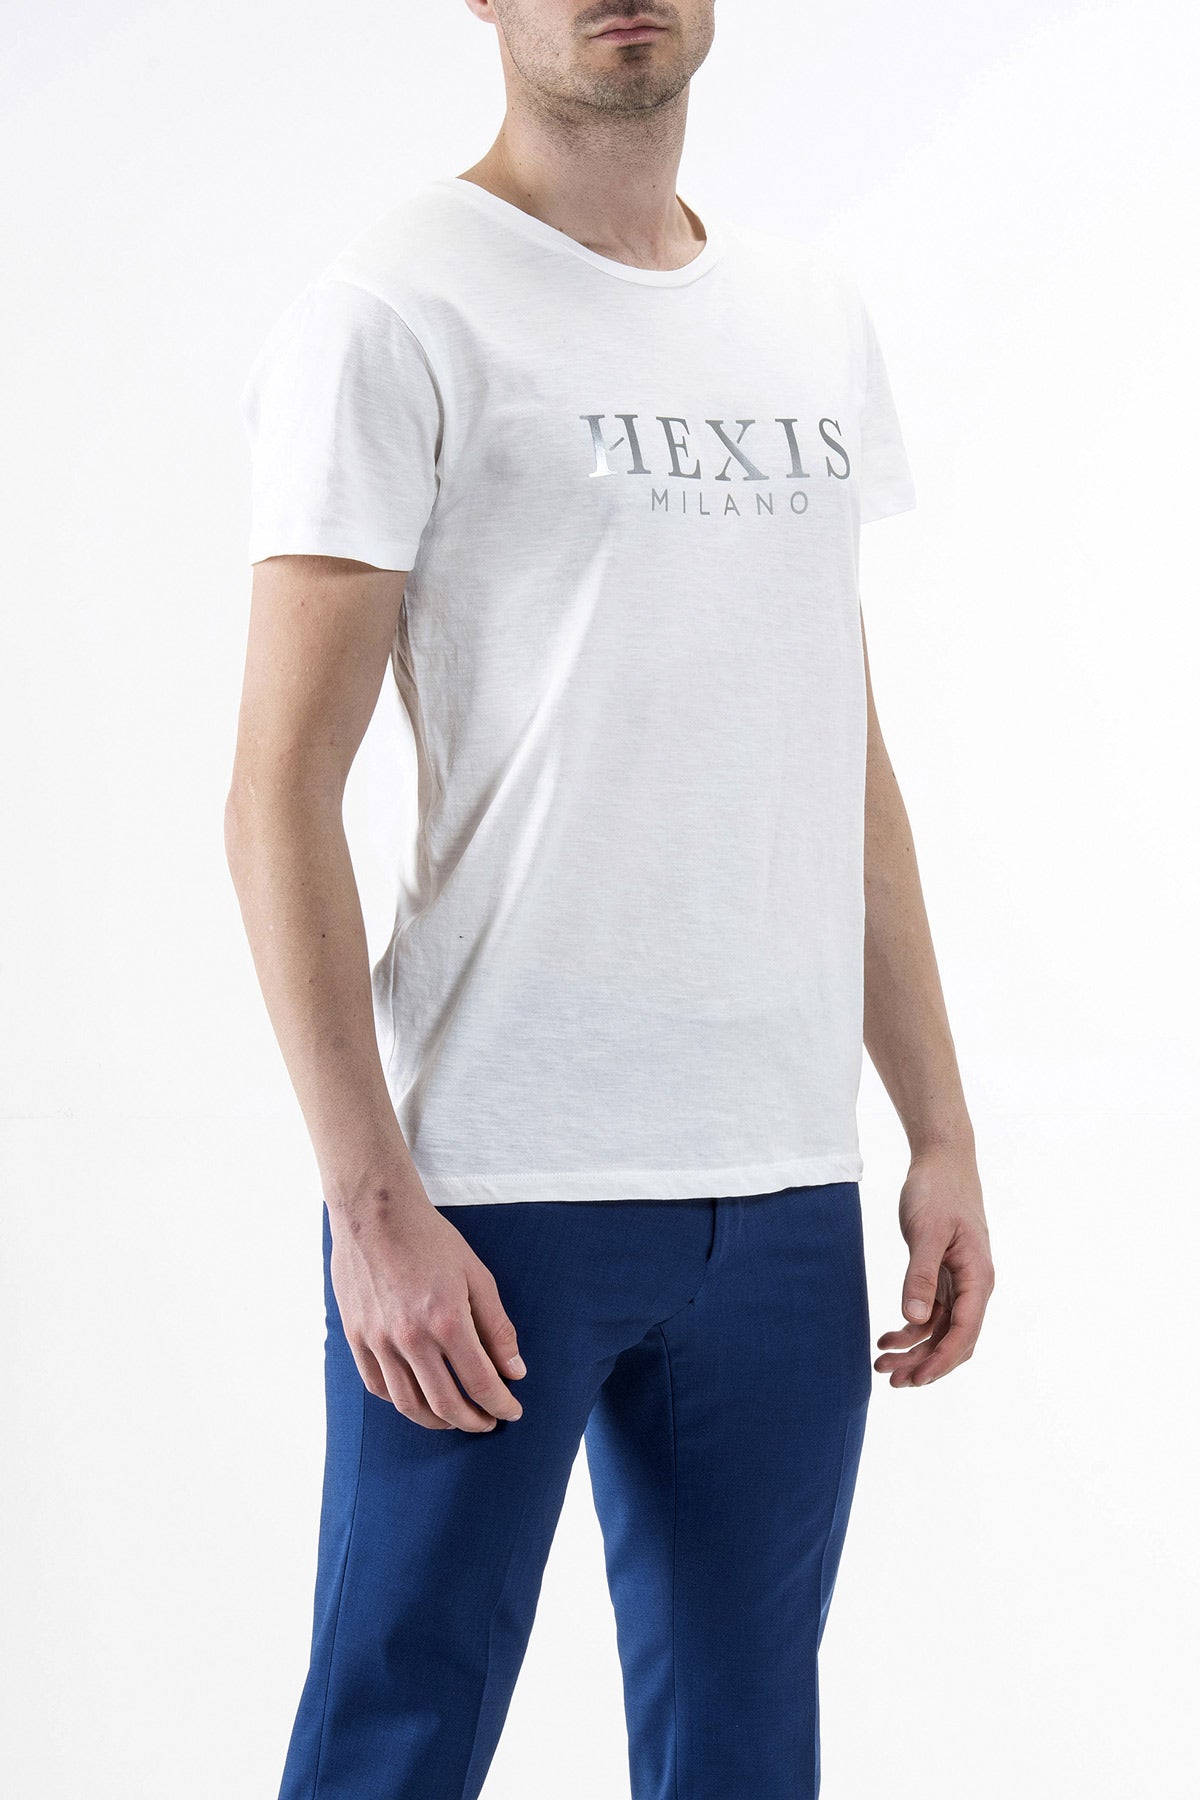 T-ShirtS in vari colori con logo HEXIS MILANO